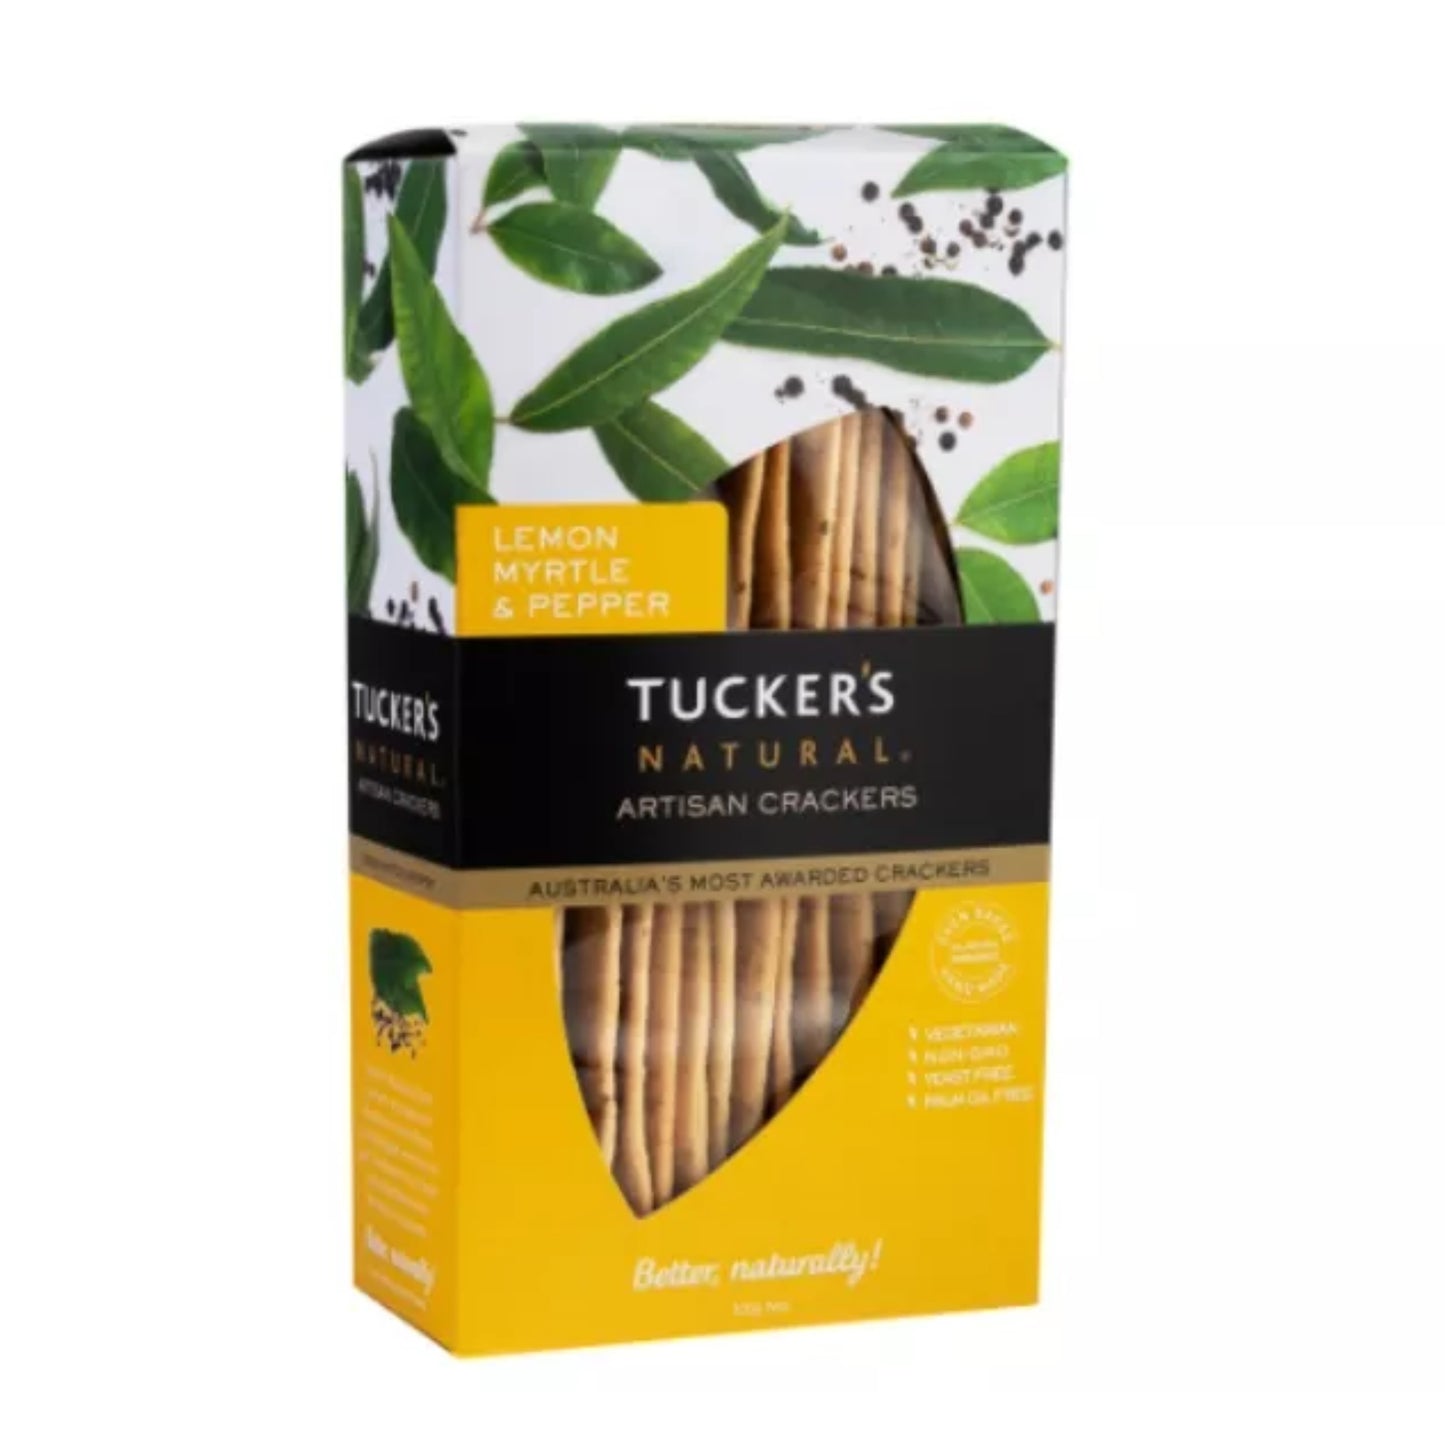 Crackers - Tuckers Natural - Lemon Myrtle & Cracked Pepper - 100g